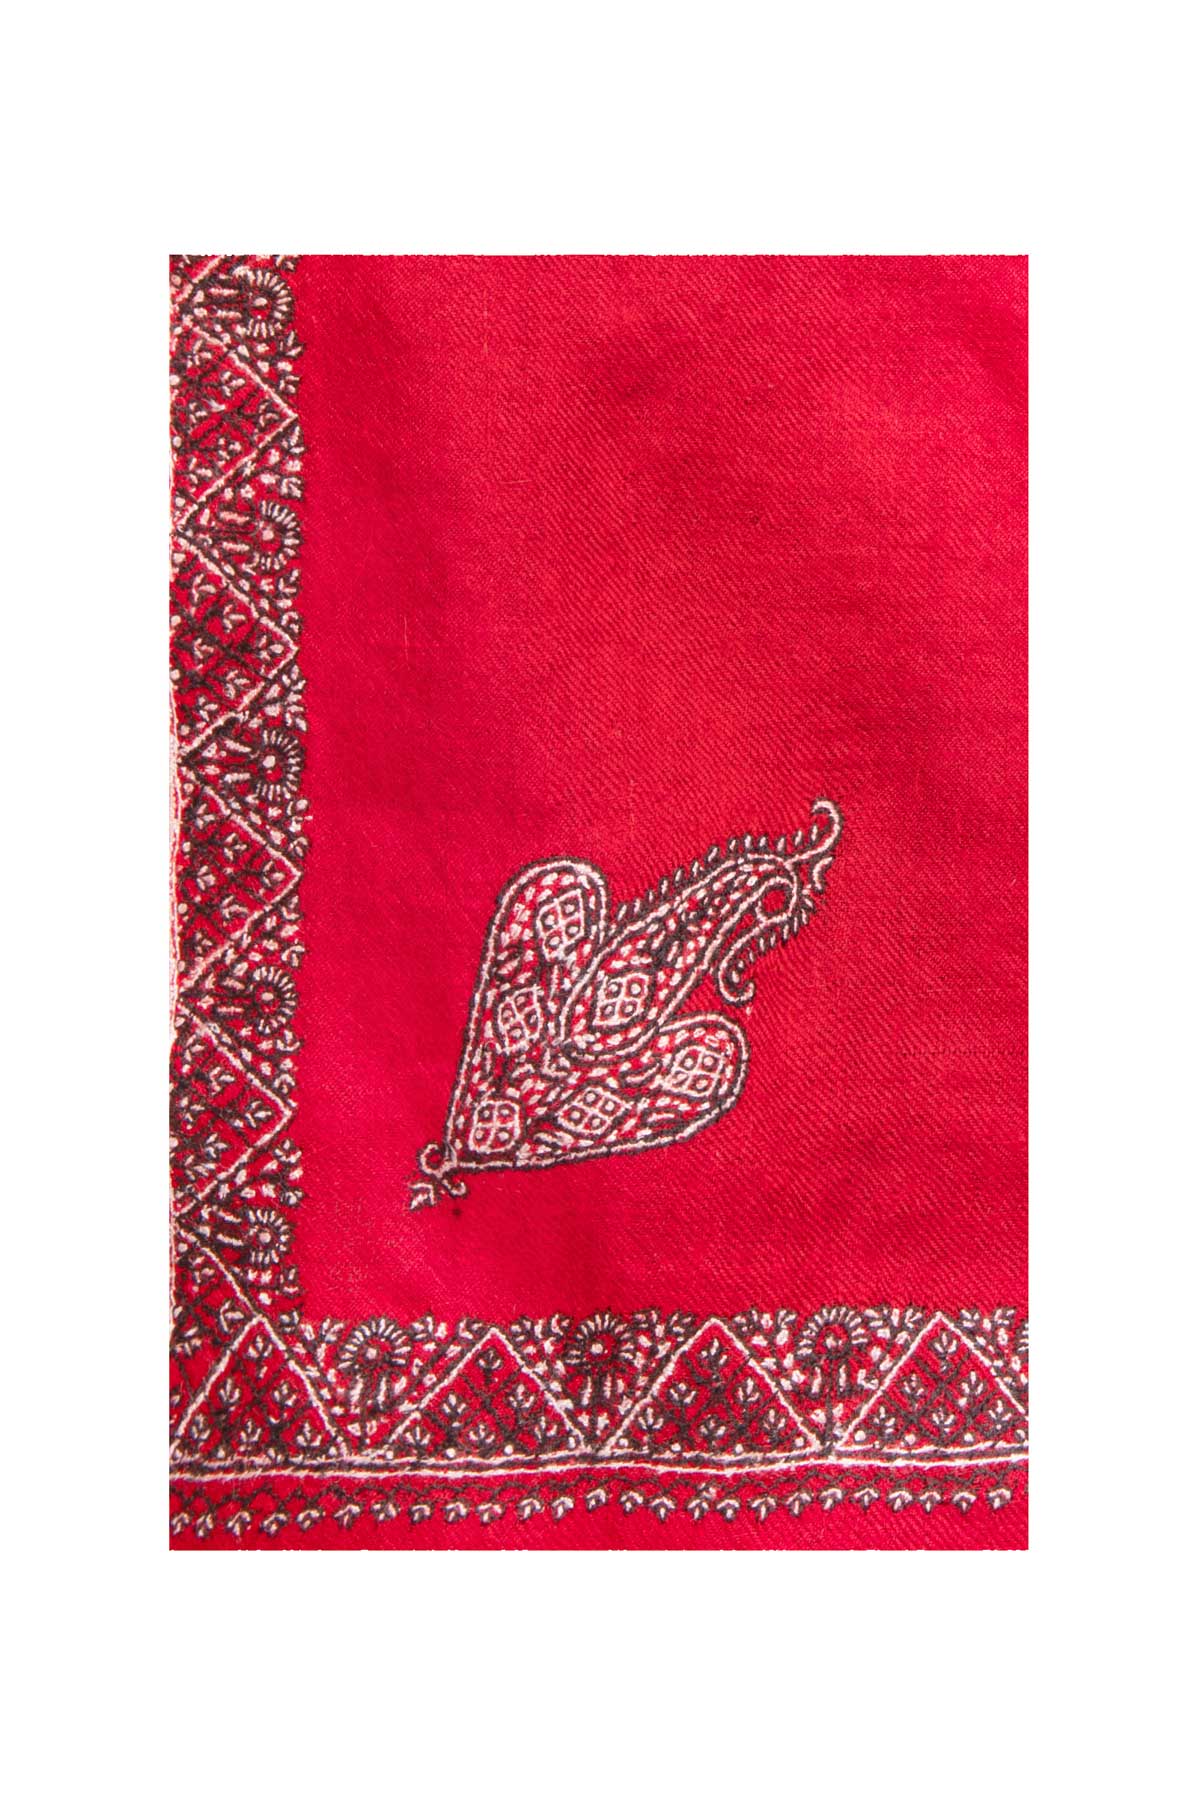 Border Embroidered Cashmere Pashmina Shawl - Red